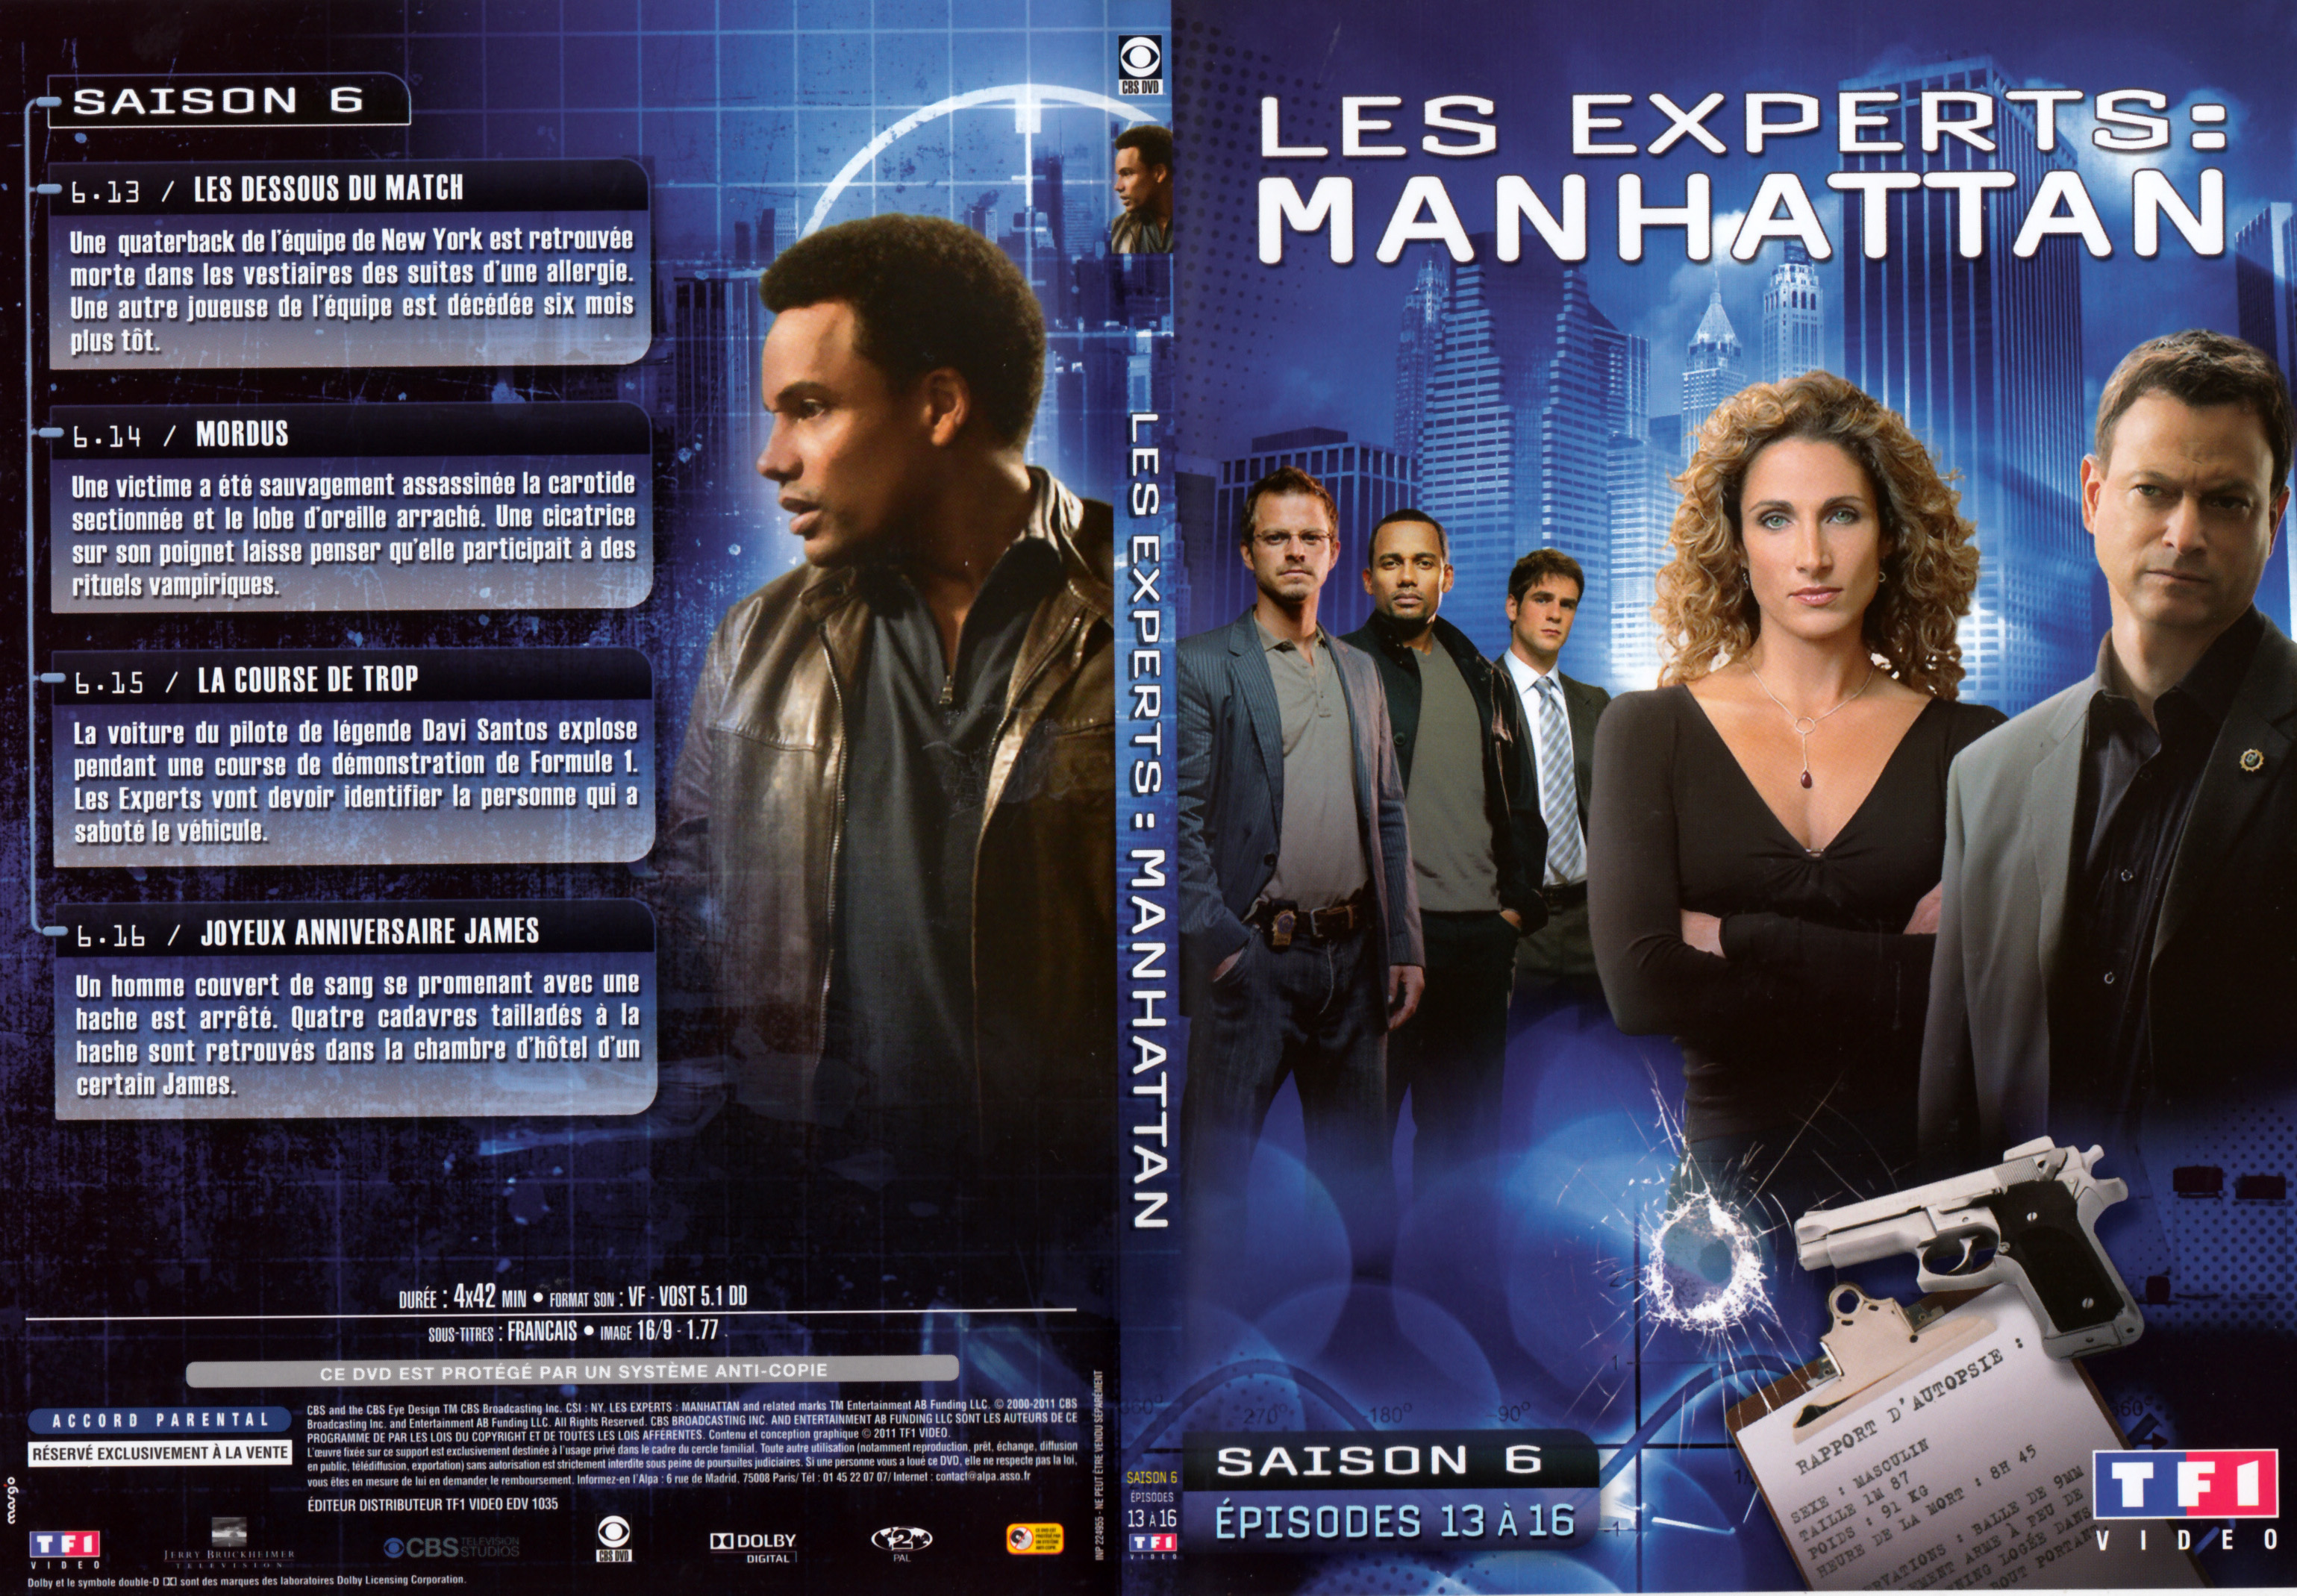 Jaquette DVD Les Experts Manhattan Saison 6 DVD 4